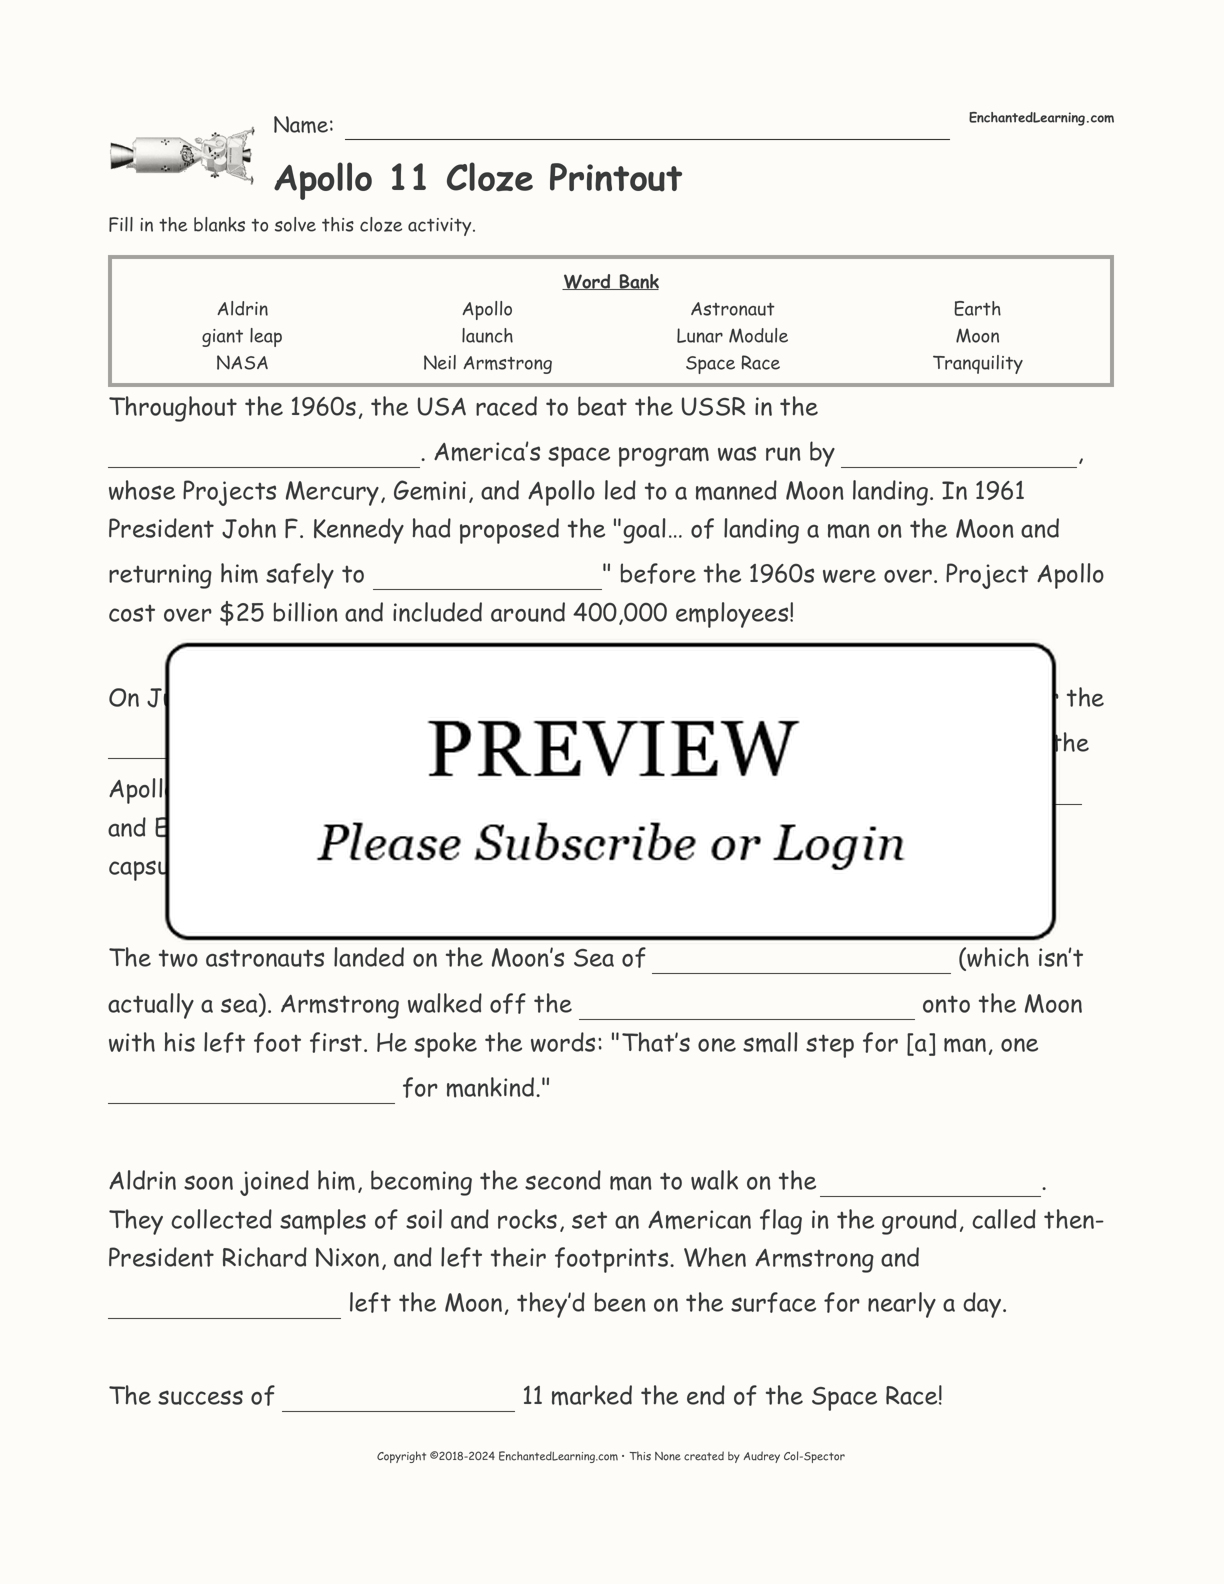 Apollo 11 Cloze Printout interactive worksheet page 1